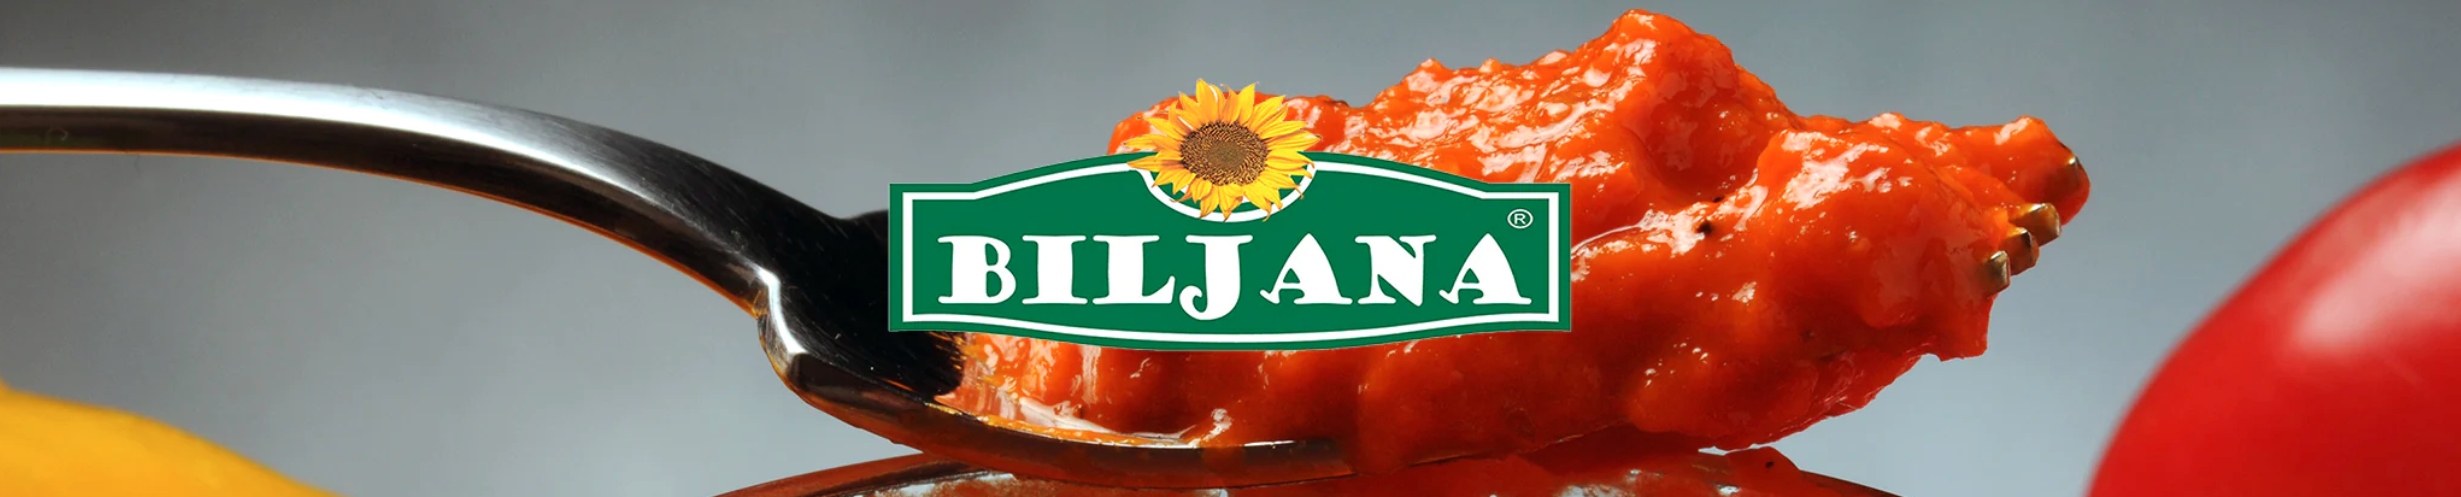 Biljana Ajvar - Global Imports and Exports Wholesale European Food Distributors